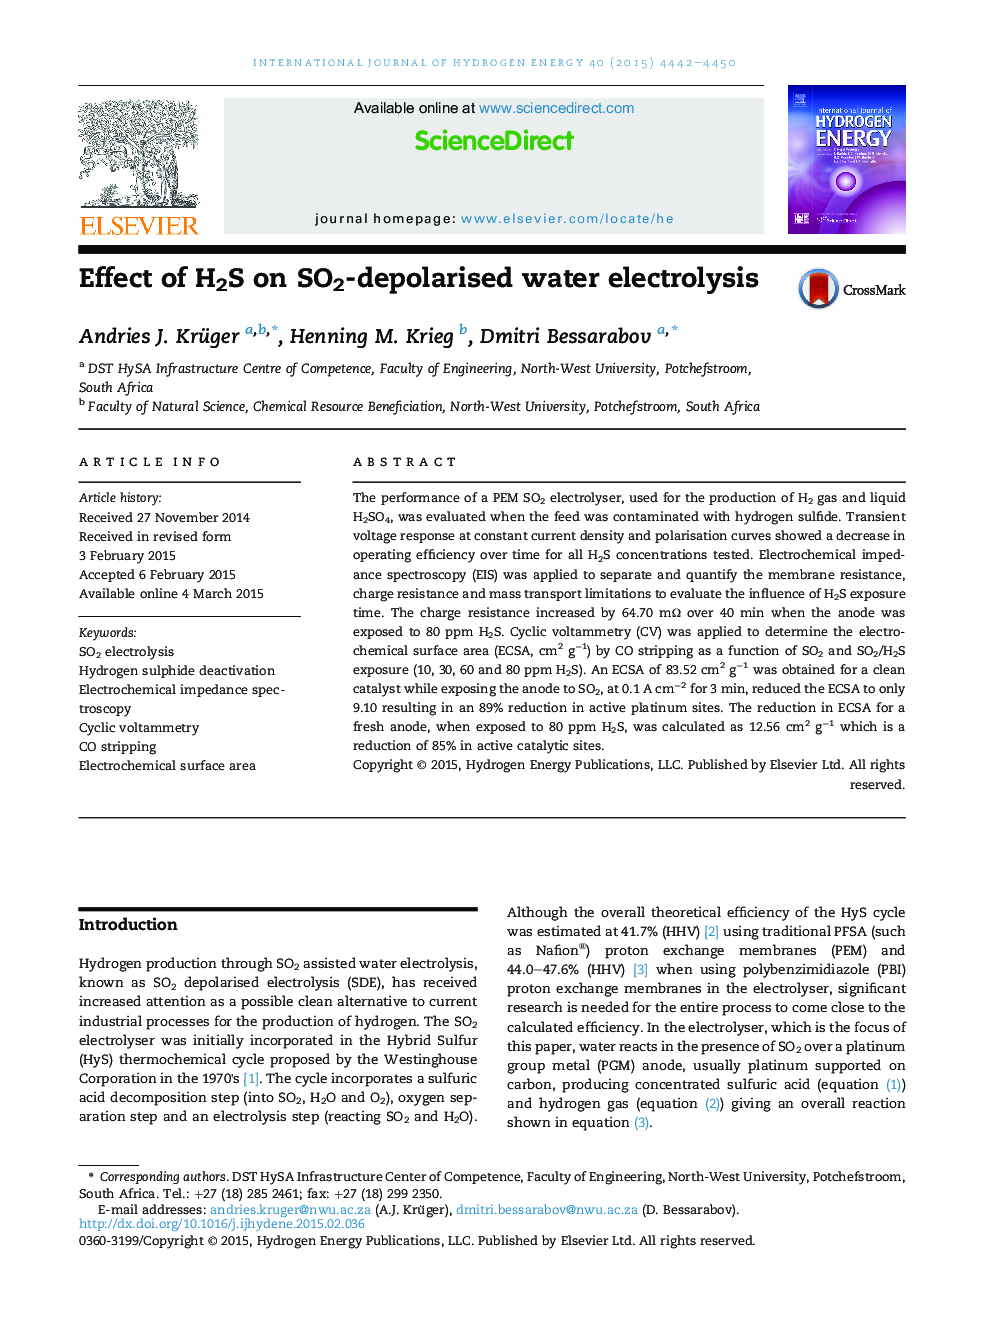 Effect of H2S on SO2-depolarised water electrolysis